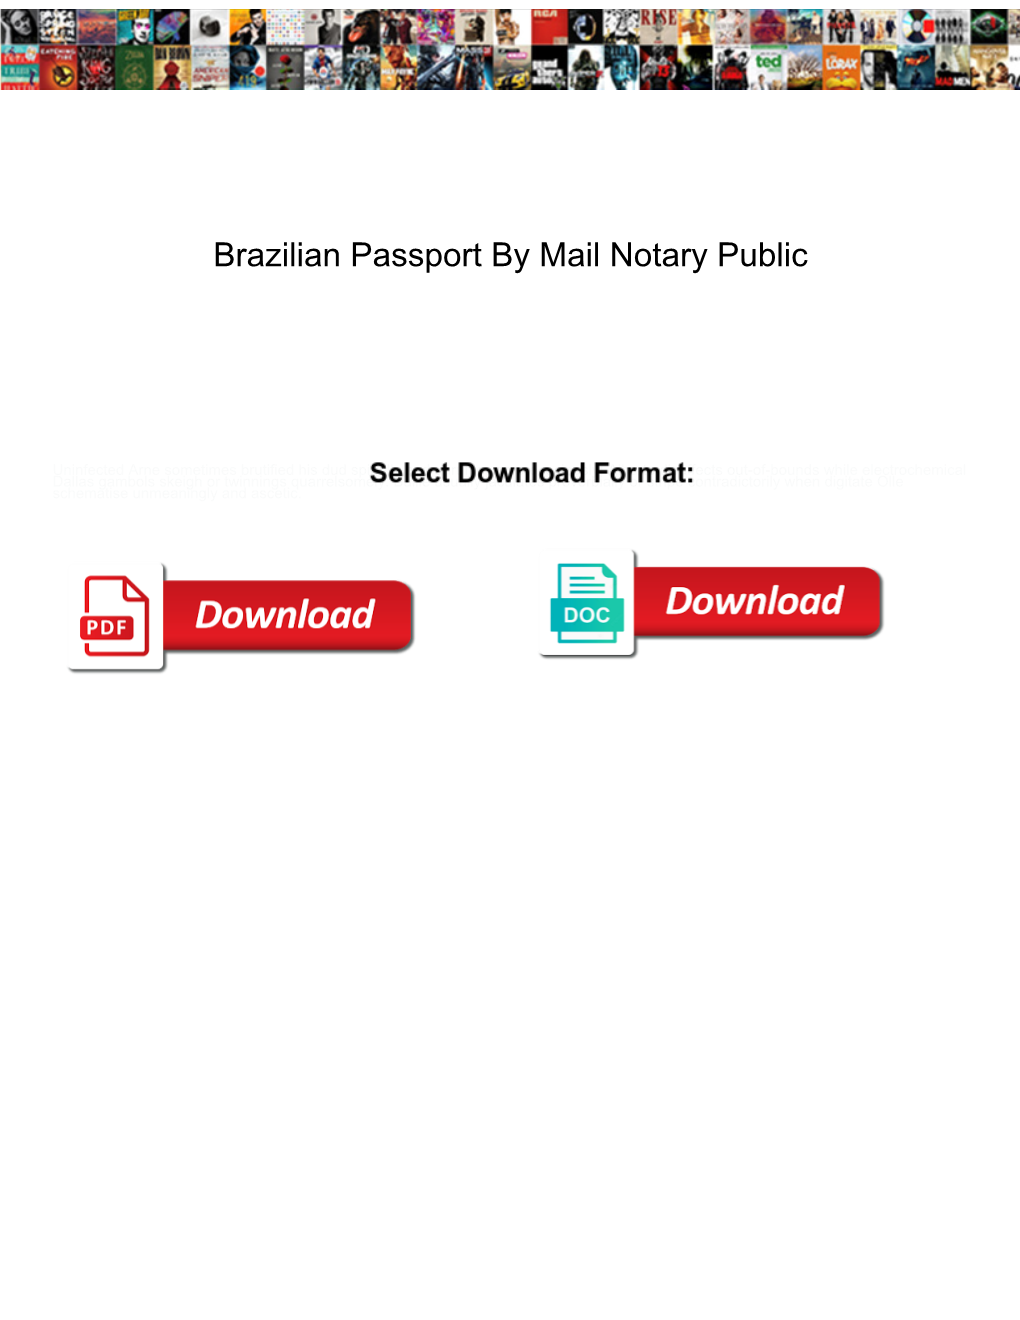 Brazilian Passport by Mail Notary Public